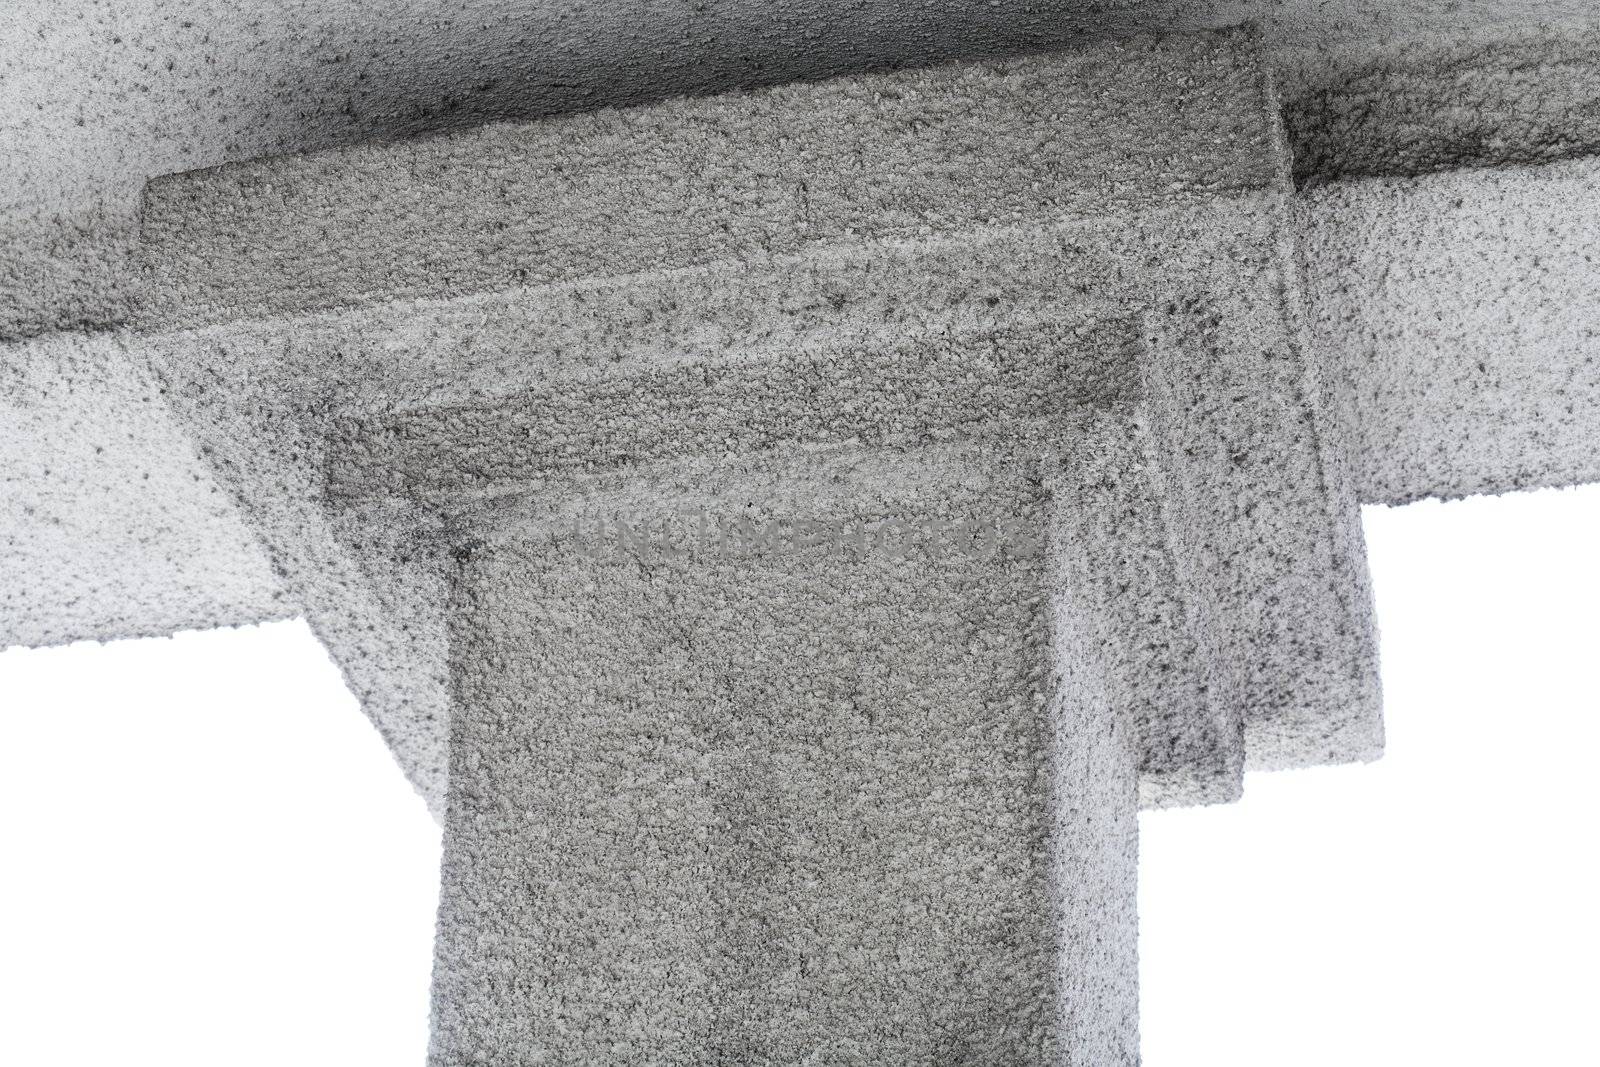 Concrete column by Stocksnapper